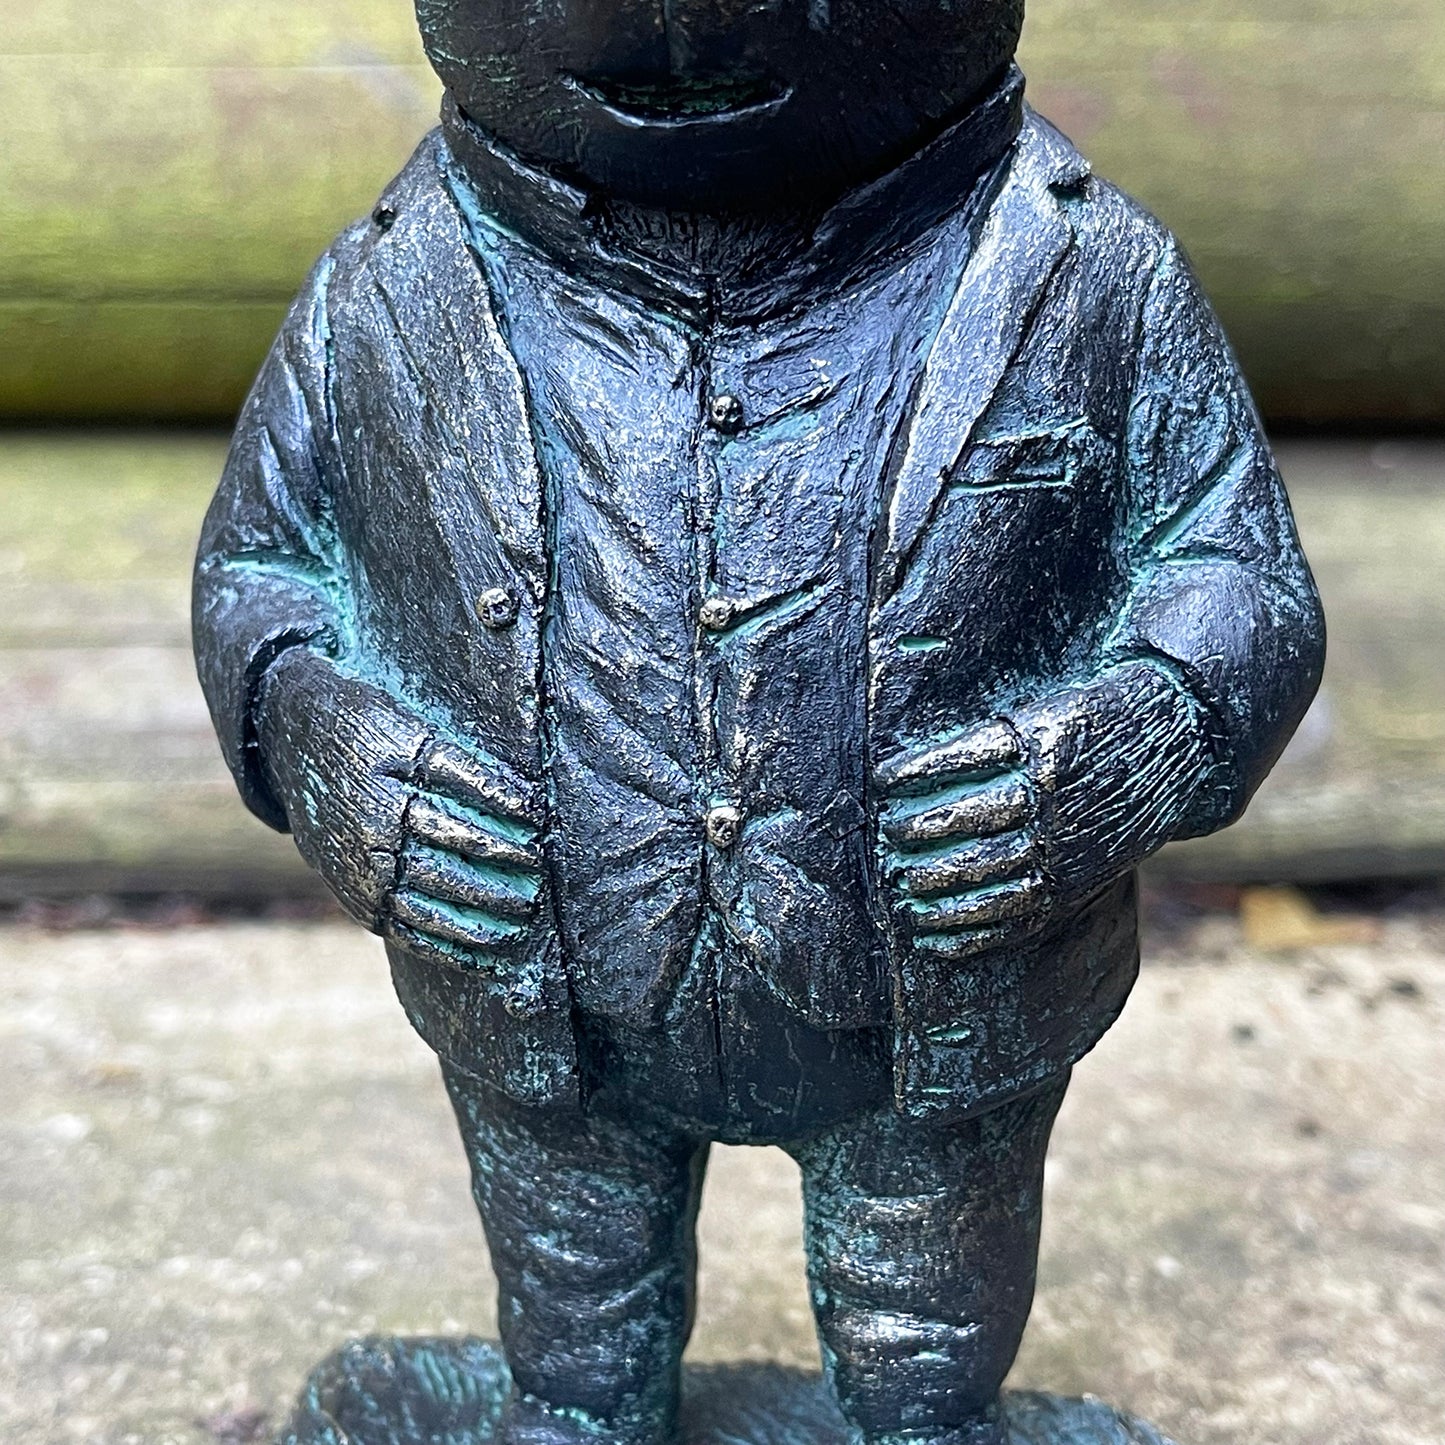 Herr Maulwurf-Ornament aus Bronze